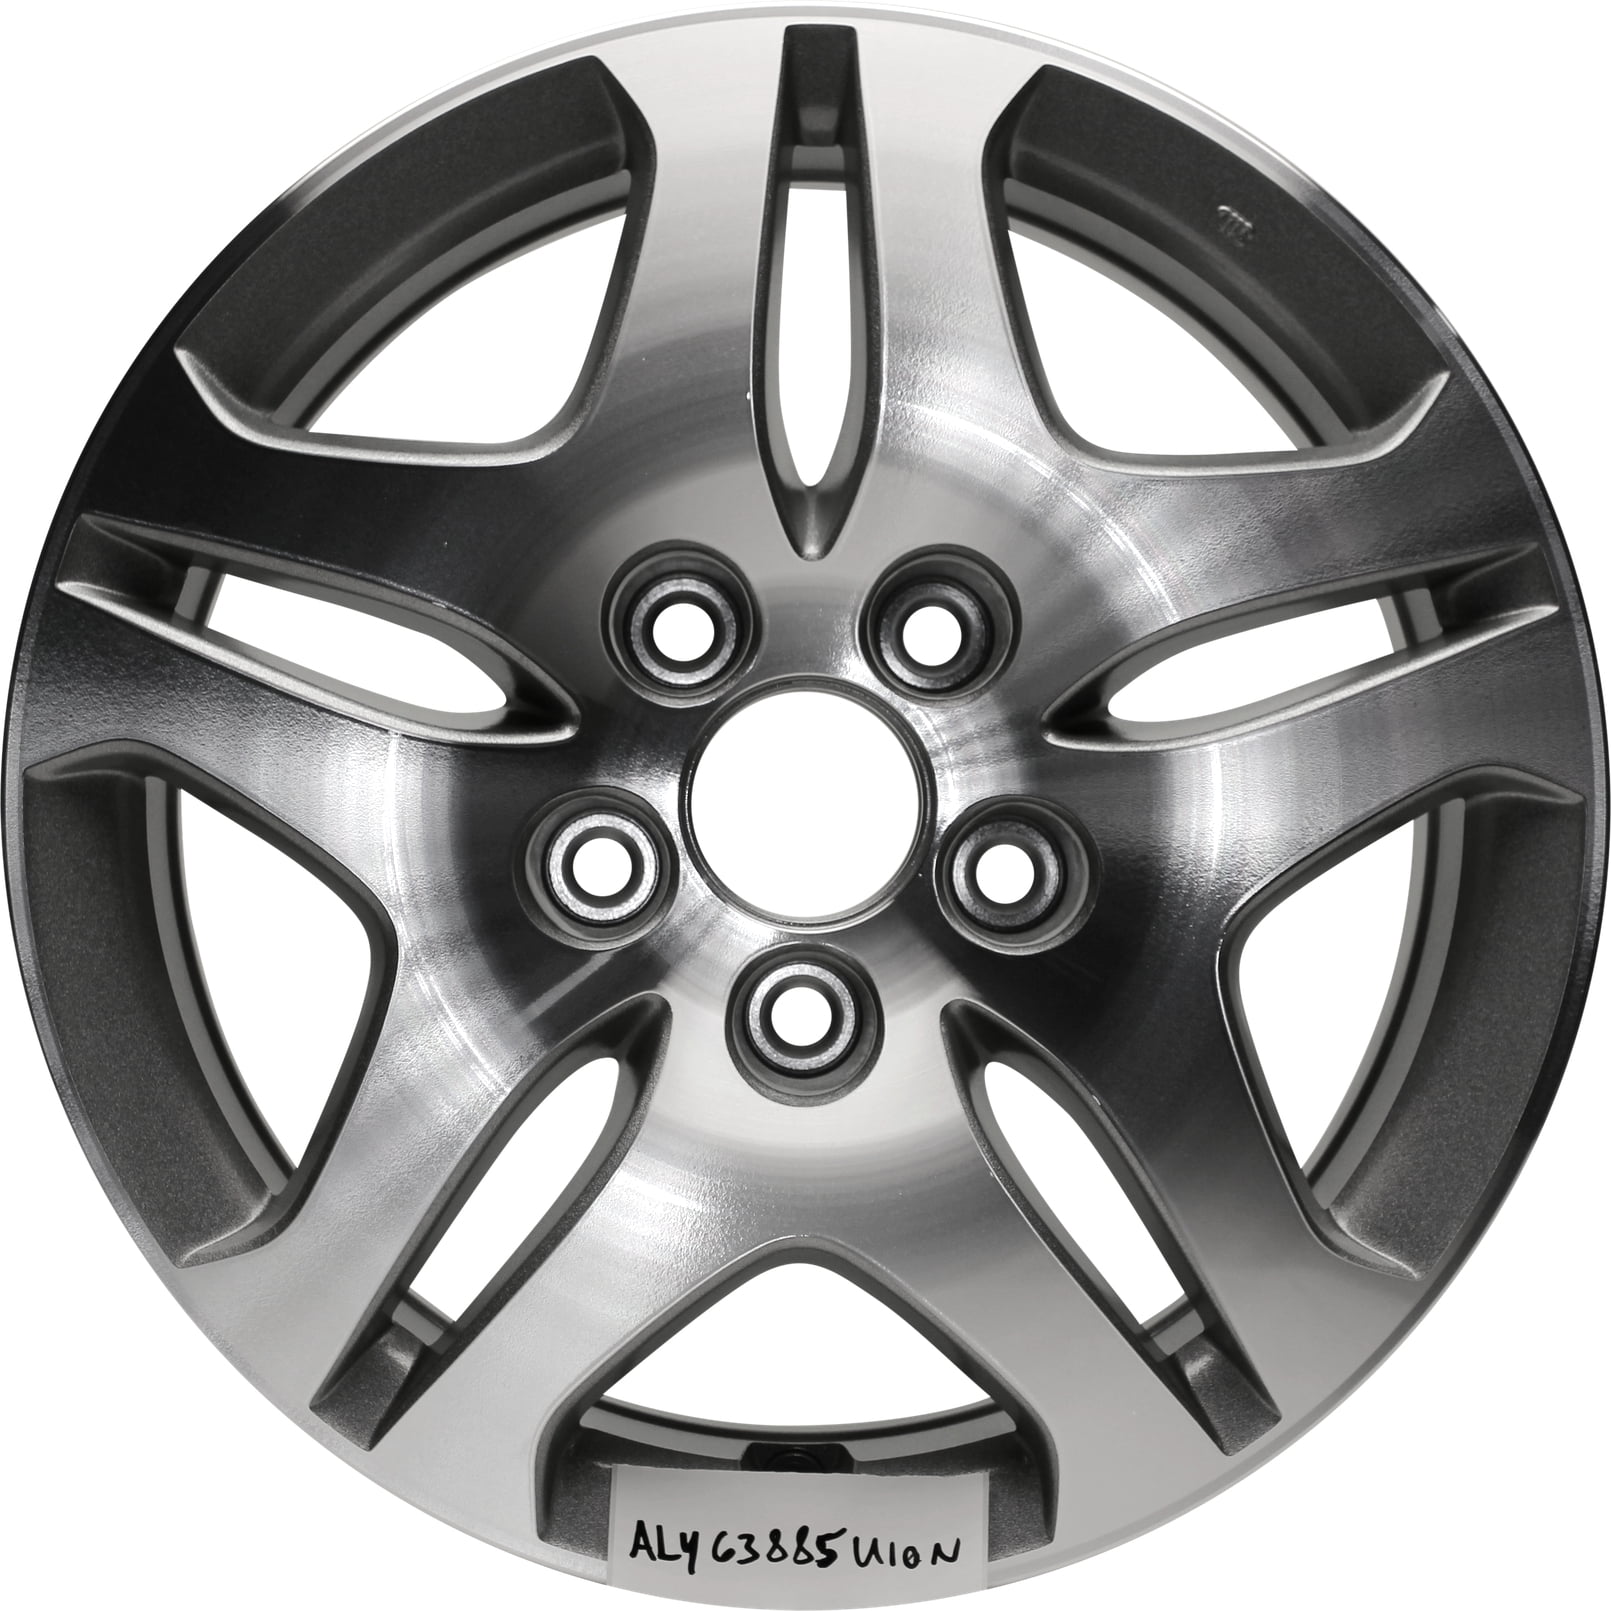 Precision 16 x Slim Fit Tuner Alloy Wheel Nuts for Ĥonda Civic PN.SFP-16NM10TK+SKEY120